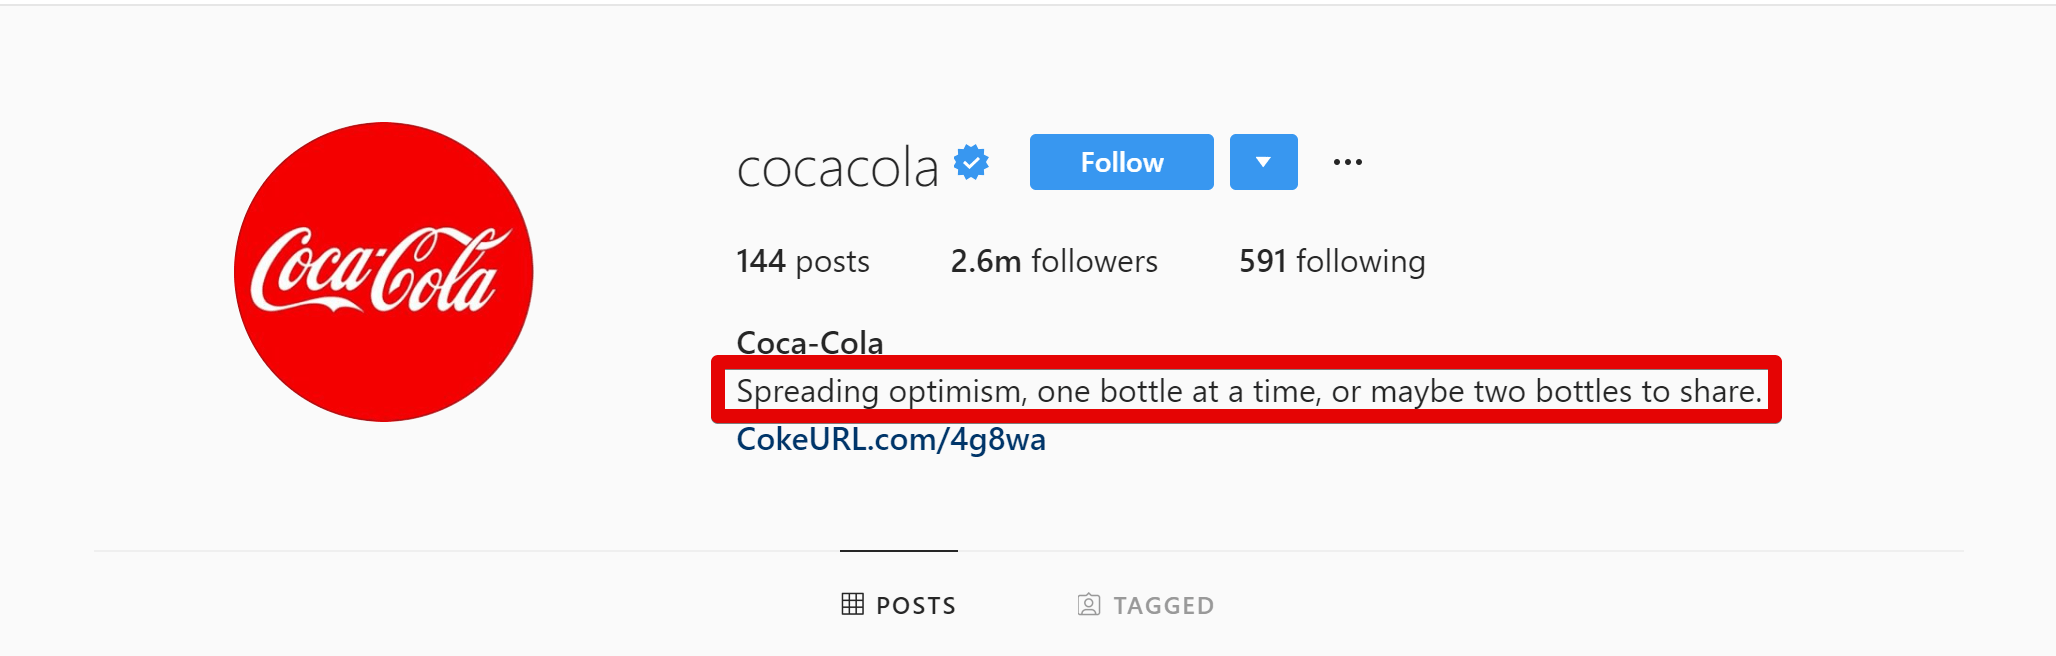 instagram bio example of Coca-Cola